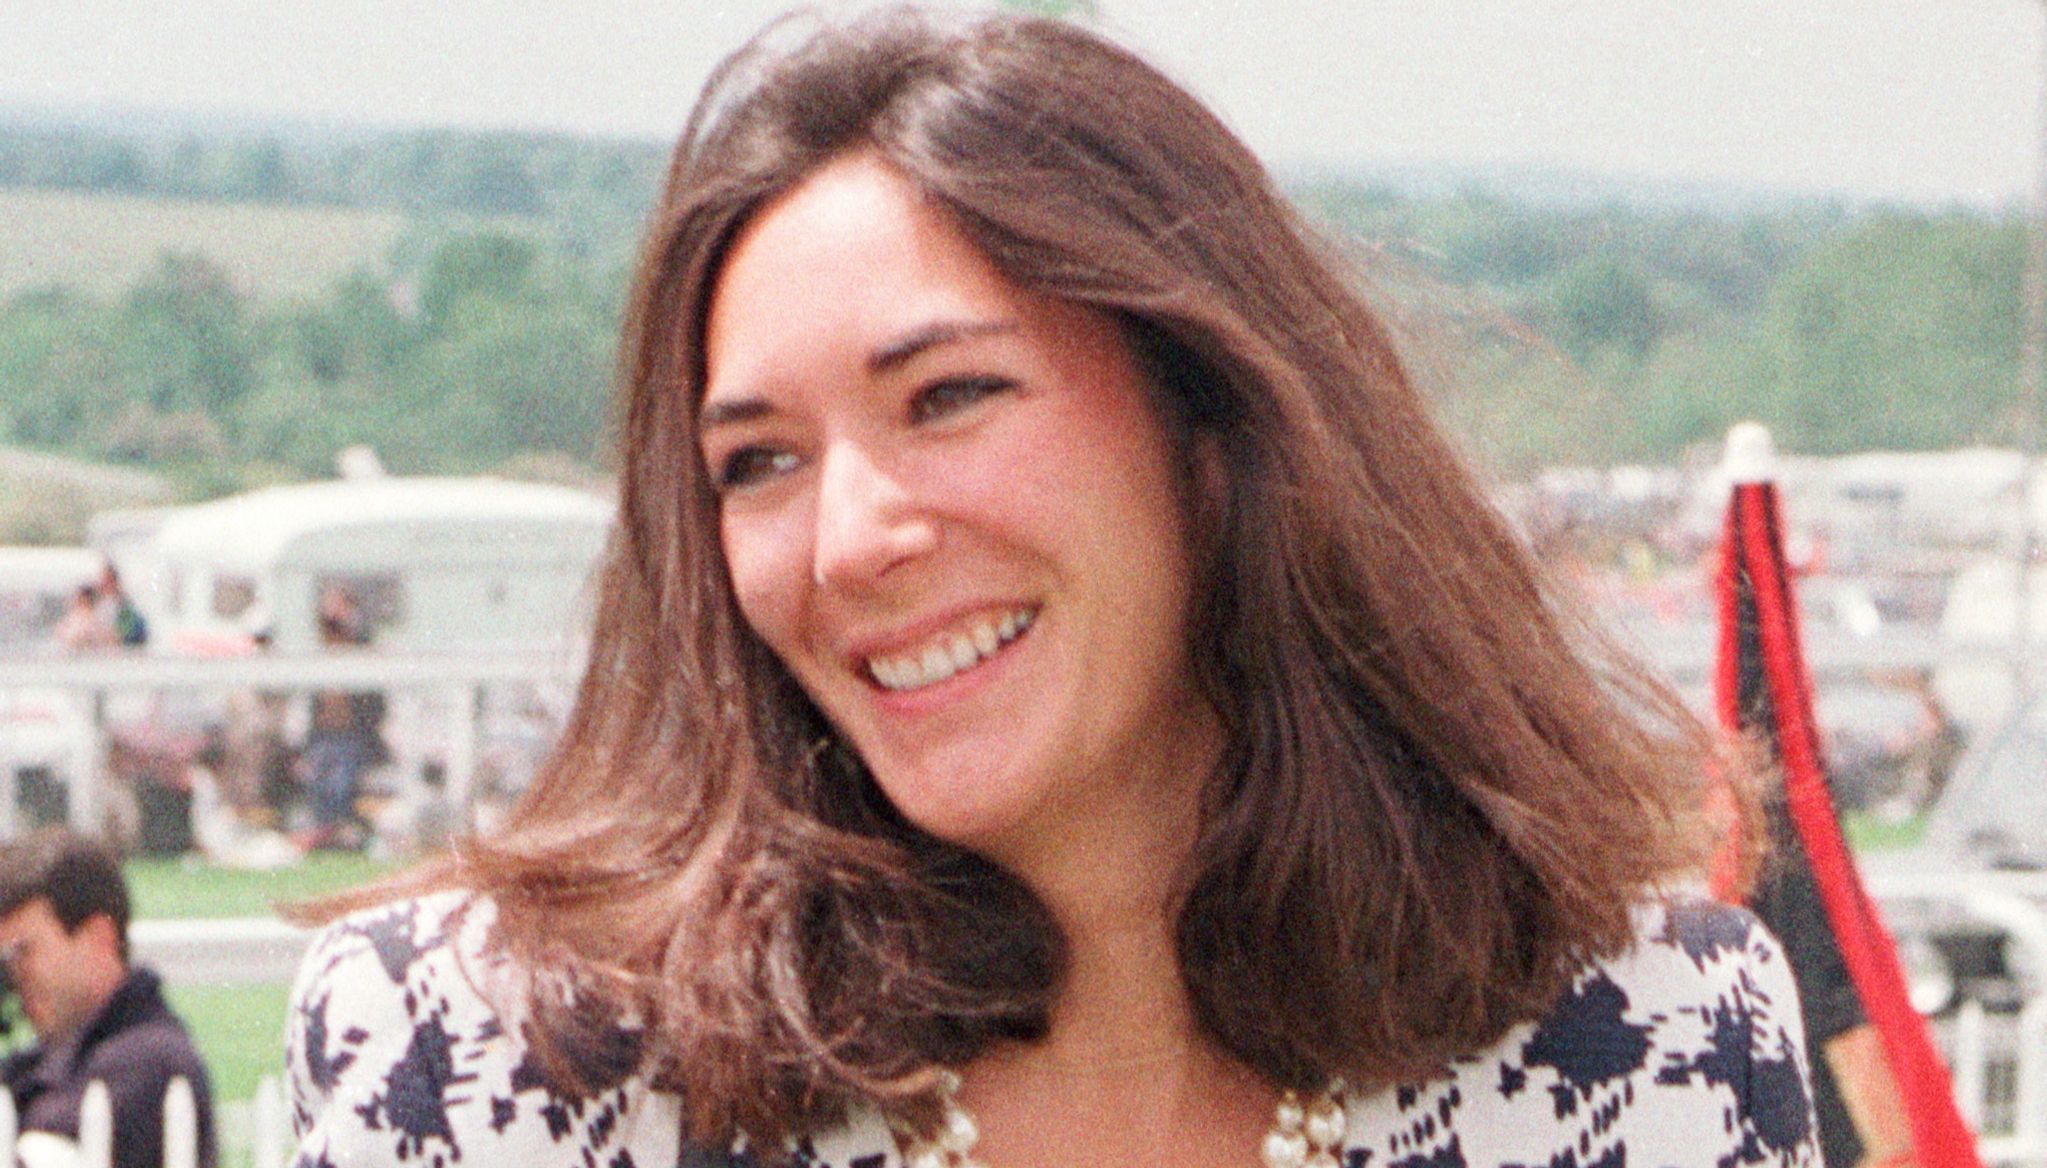 Ghislaine Maxwell, daughter of Robert Maxwell, in 1991.